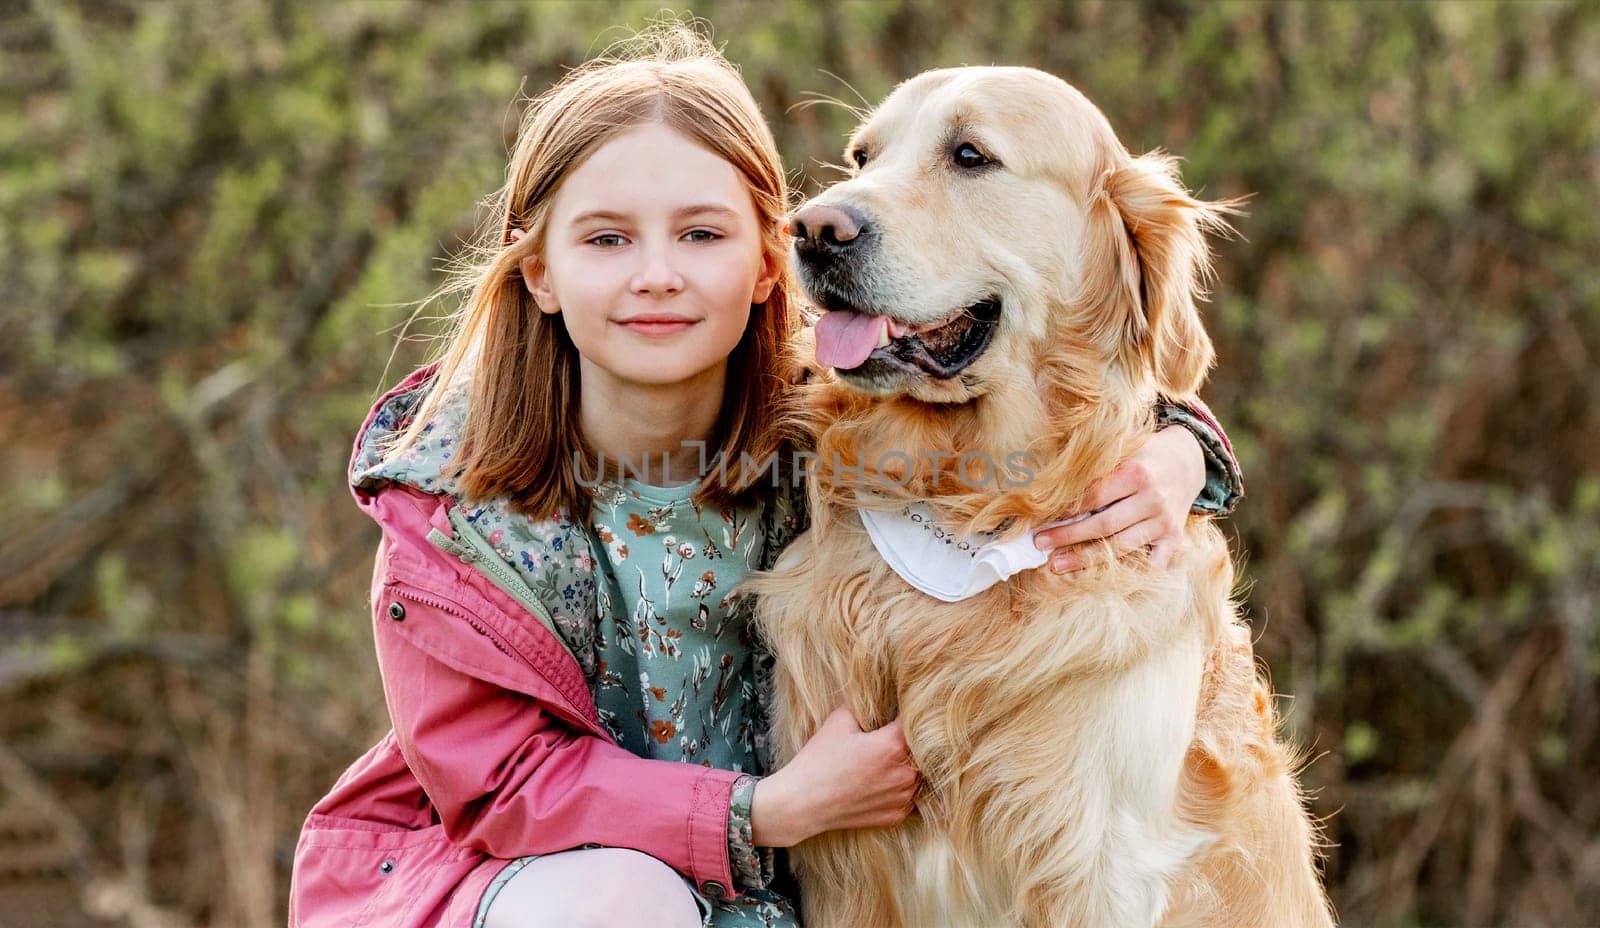 Girl with golden retriever dog by GekaSkr